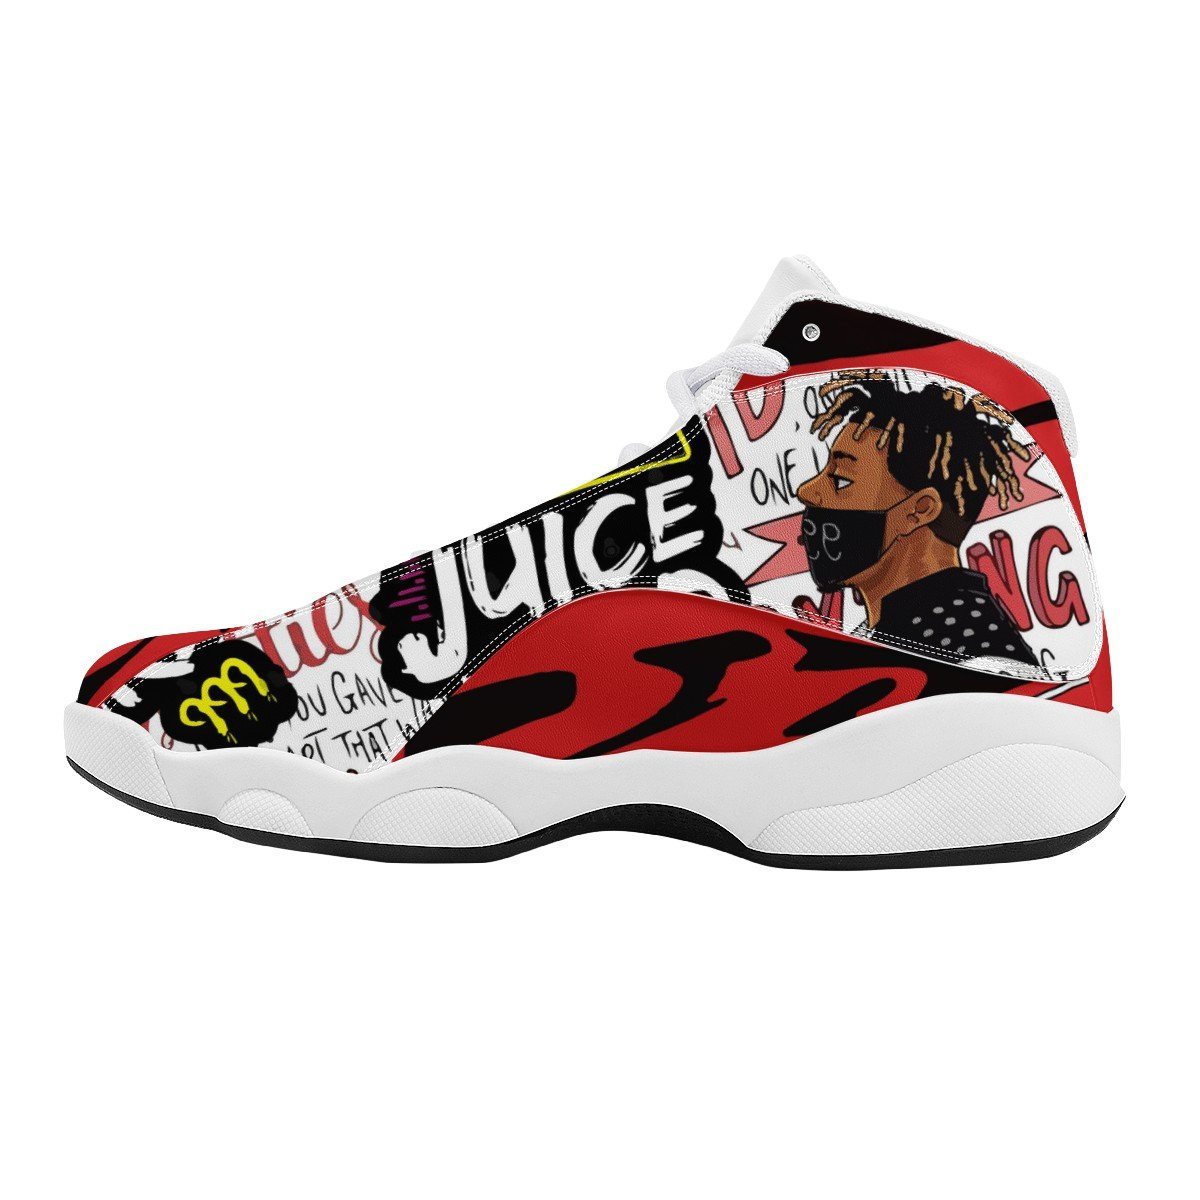 Custom Air Jordan 13 Retro - “Legends Never Die” Juice WRLD Custom